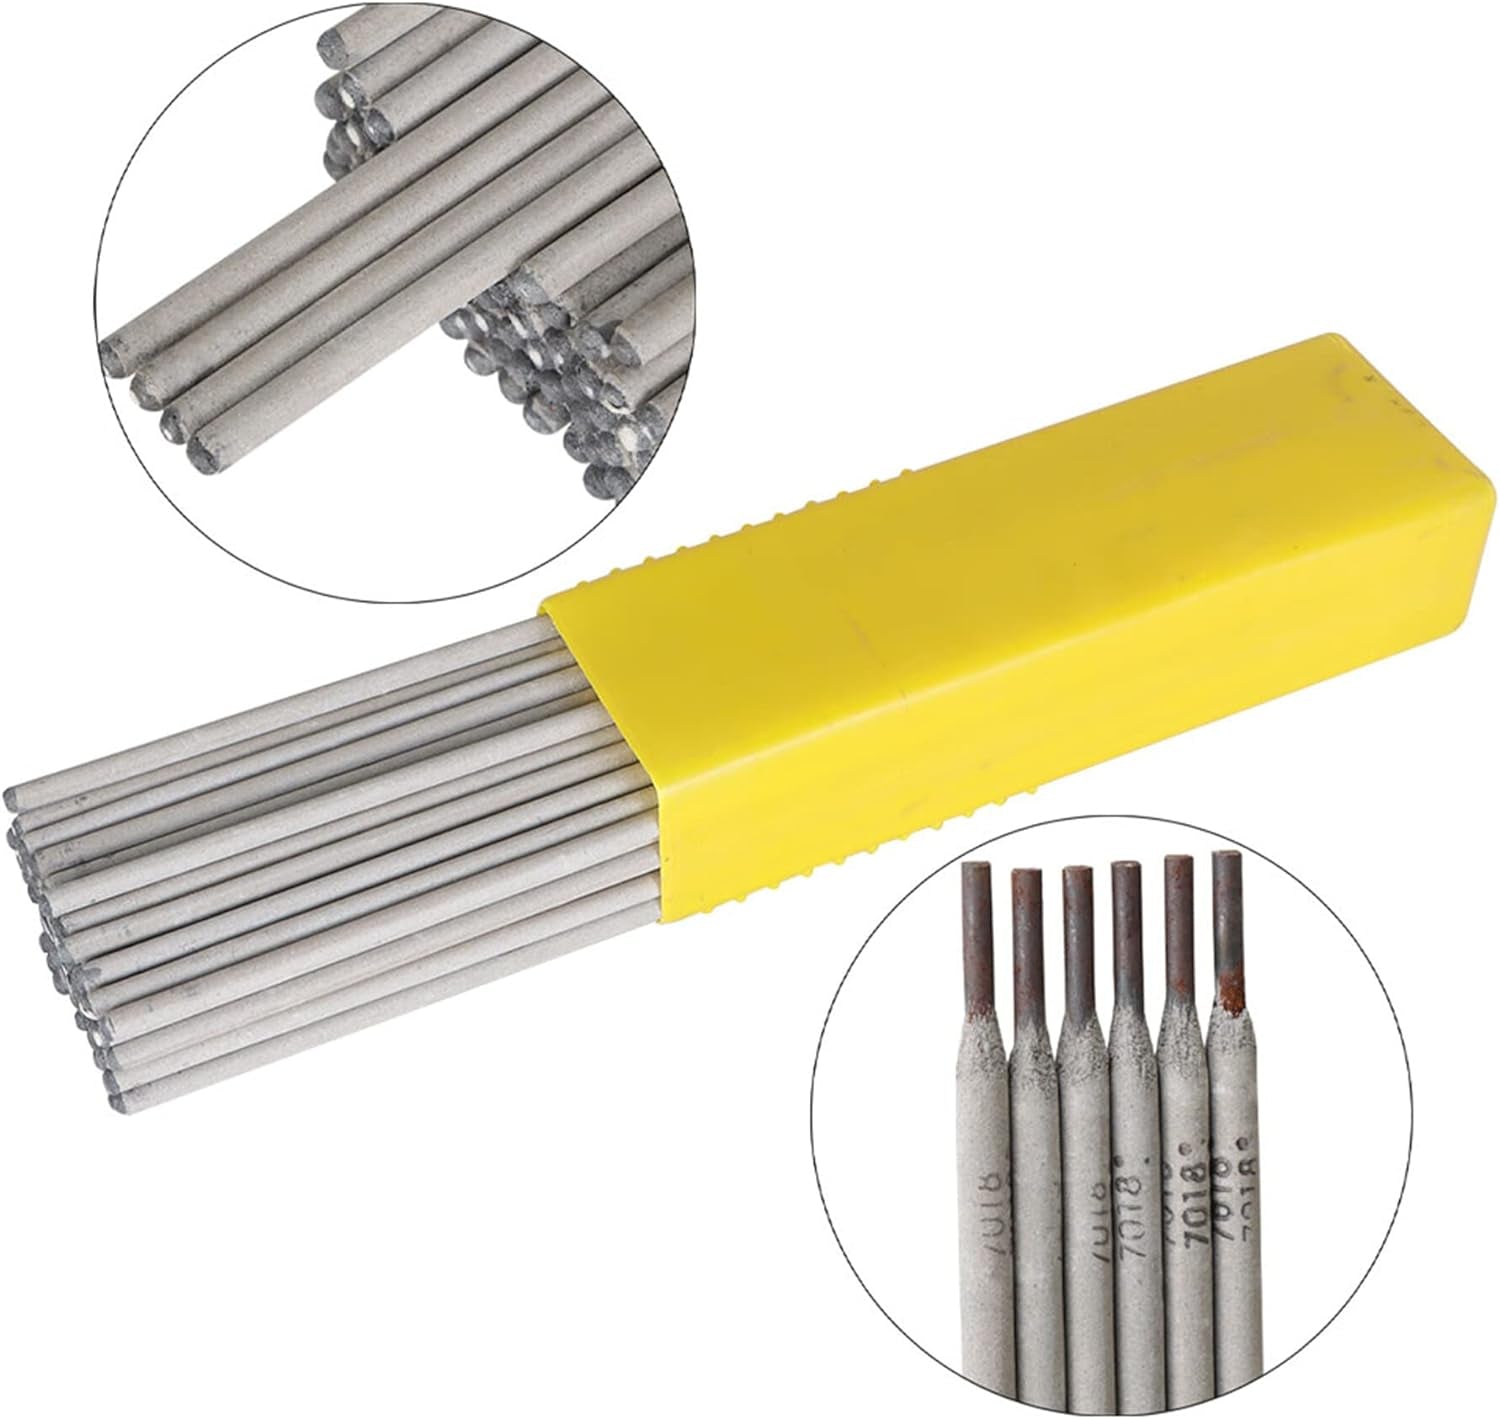 E7018 50 Pound Welding Rod, 5/32 X 12 Inch Premium Arc Stick Electrodes Welding Rod